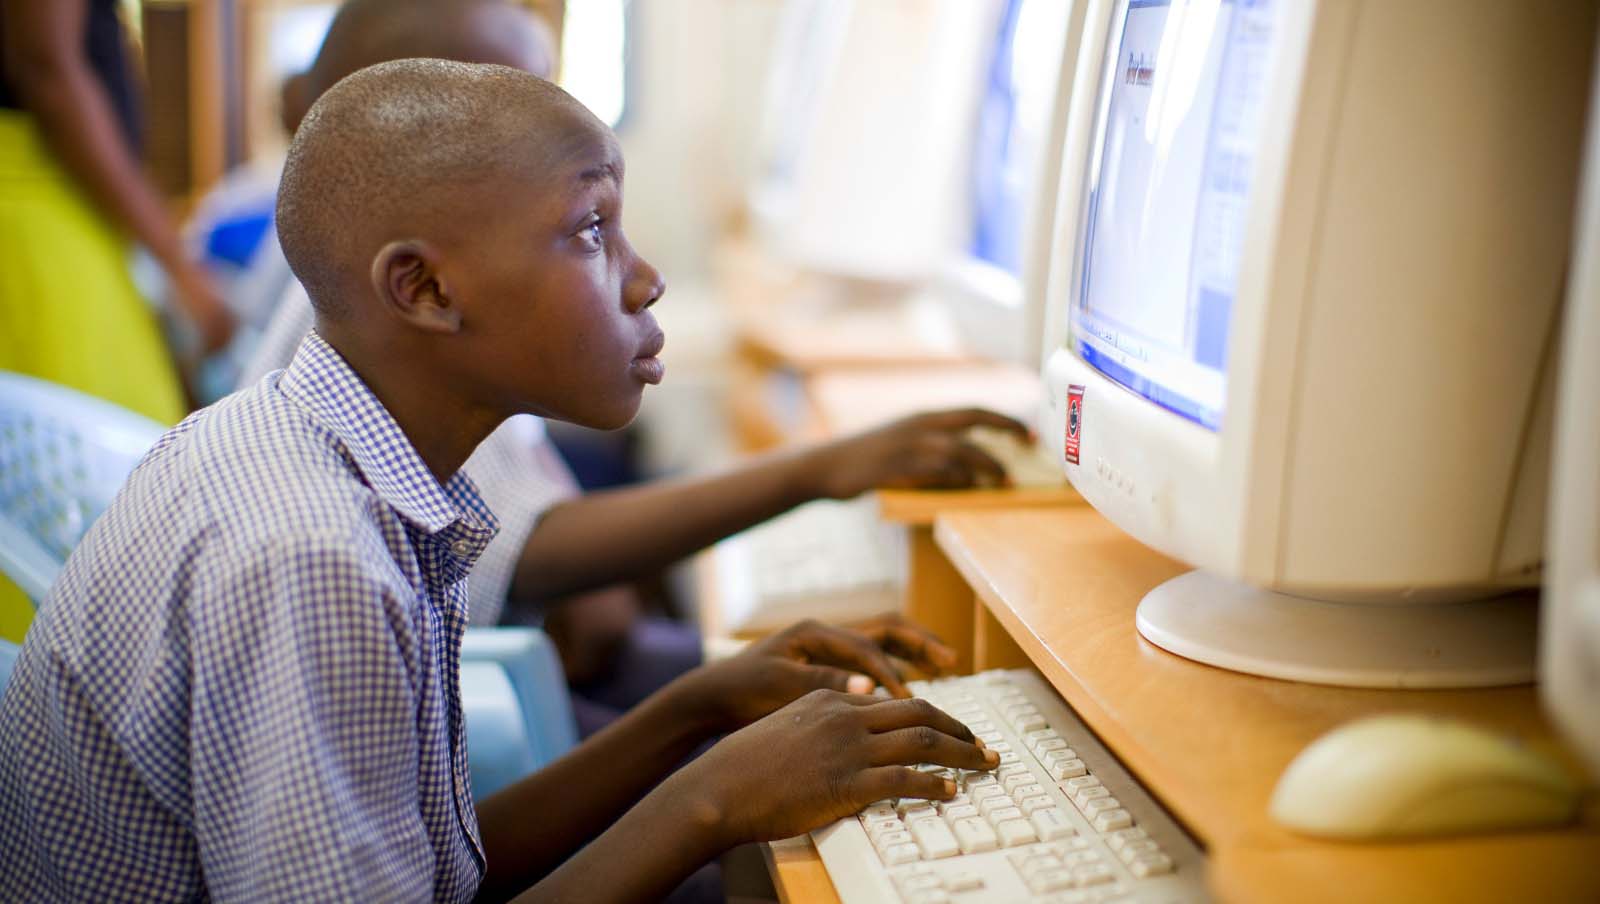 Student in Kenya using computer _blog.swaliafrica.com_